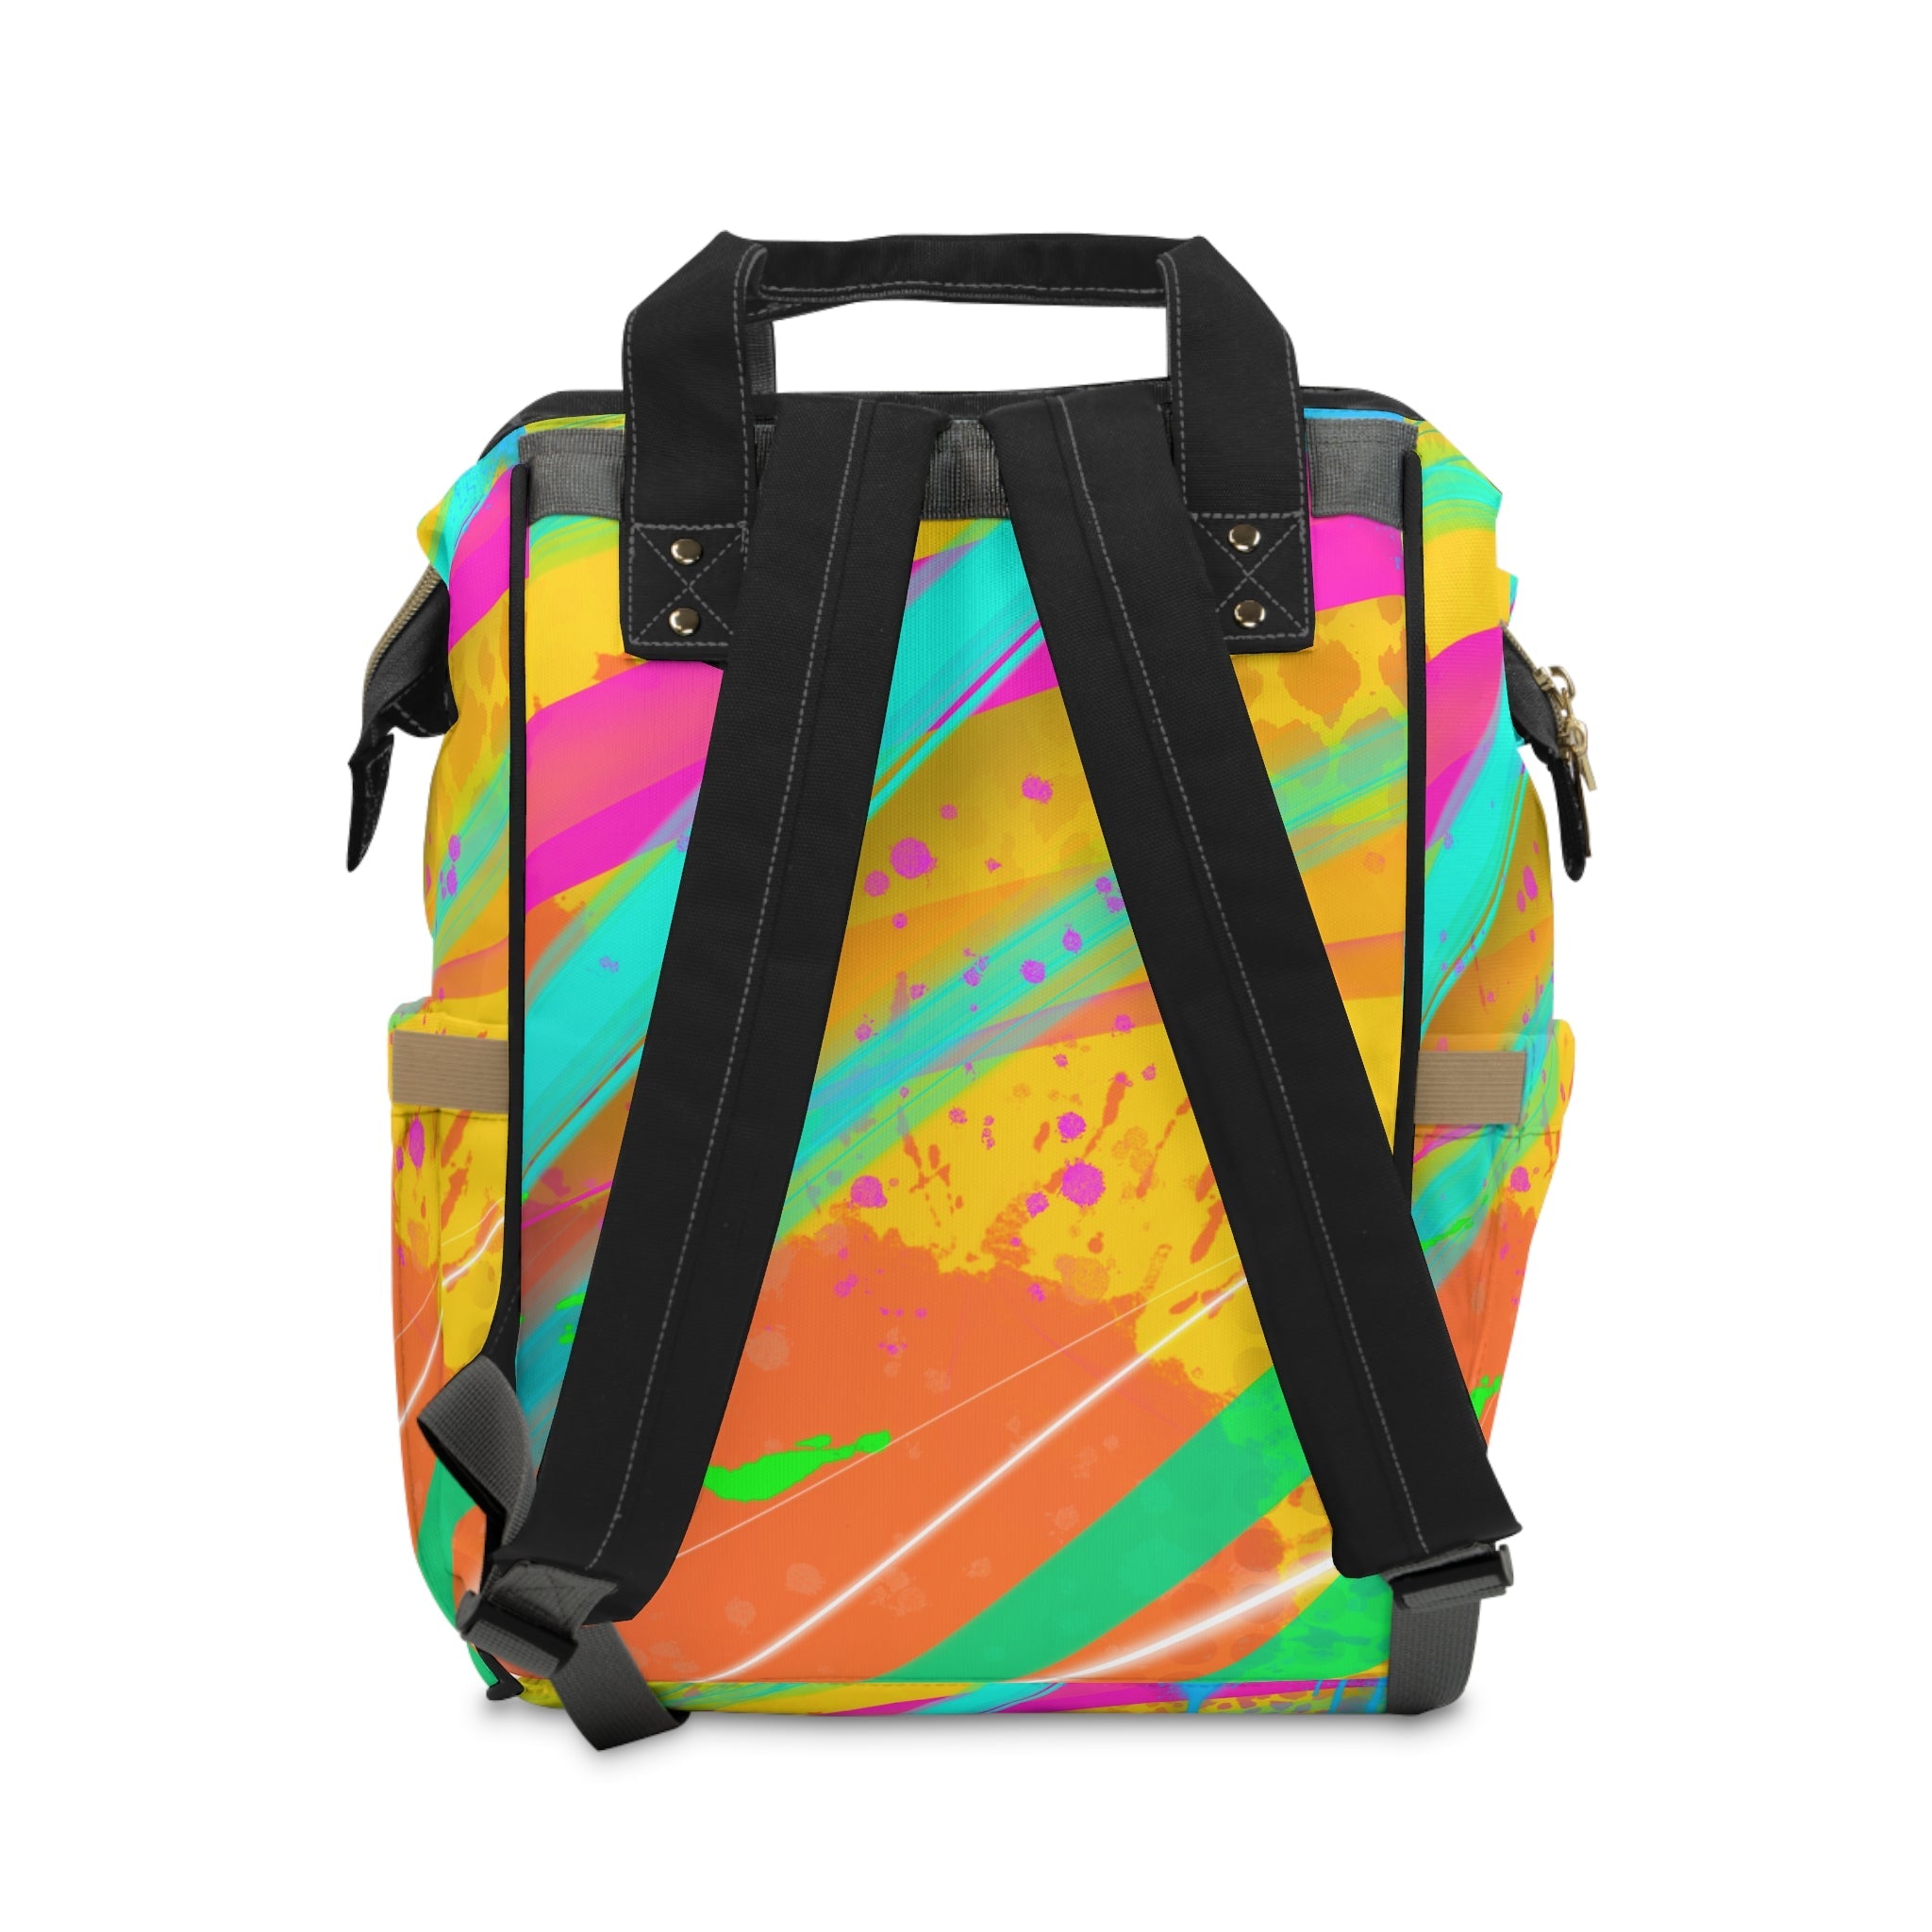 Secure the bag Multifunctional Backpack - Sean Keith Art